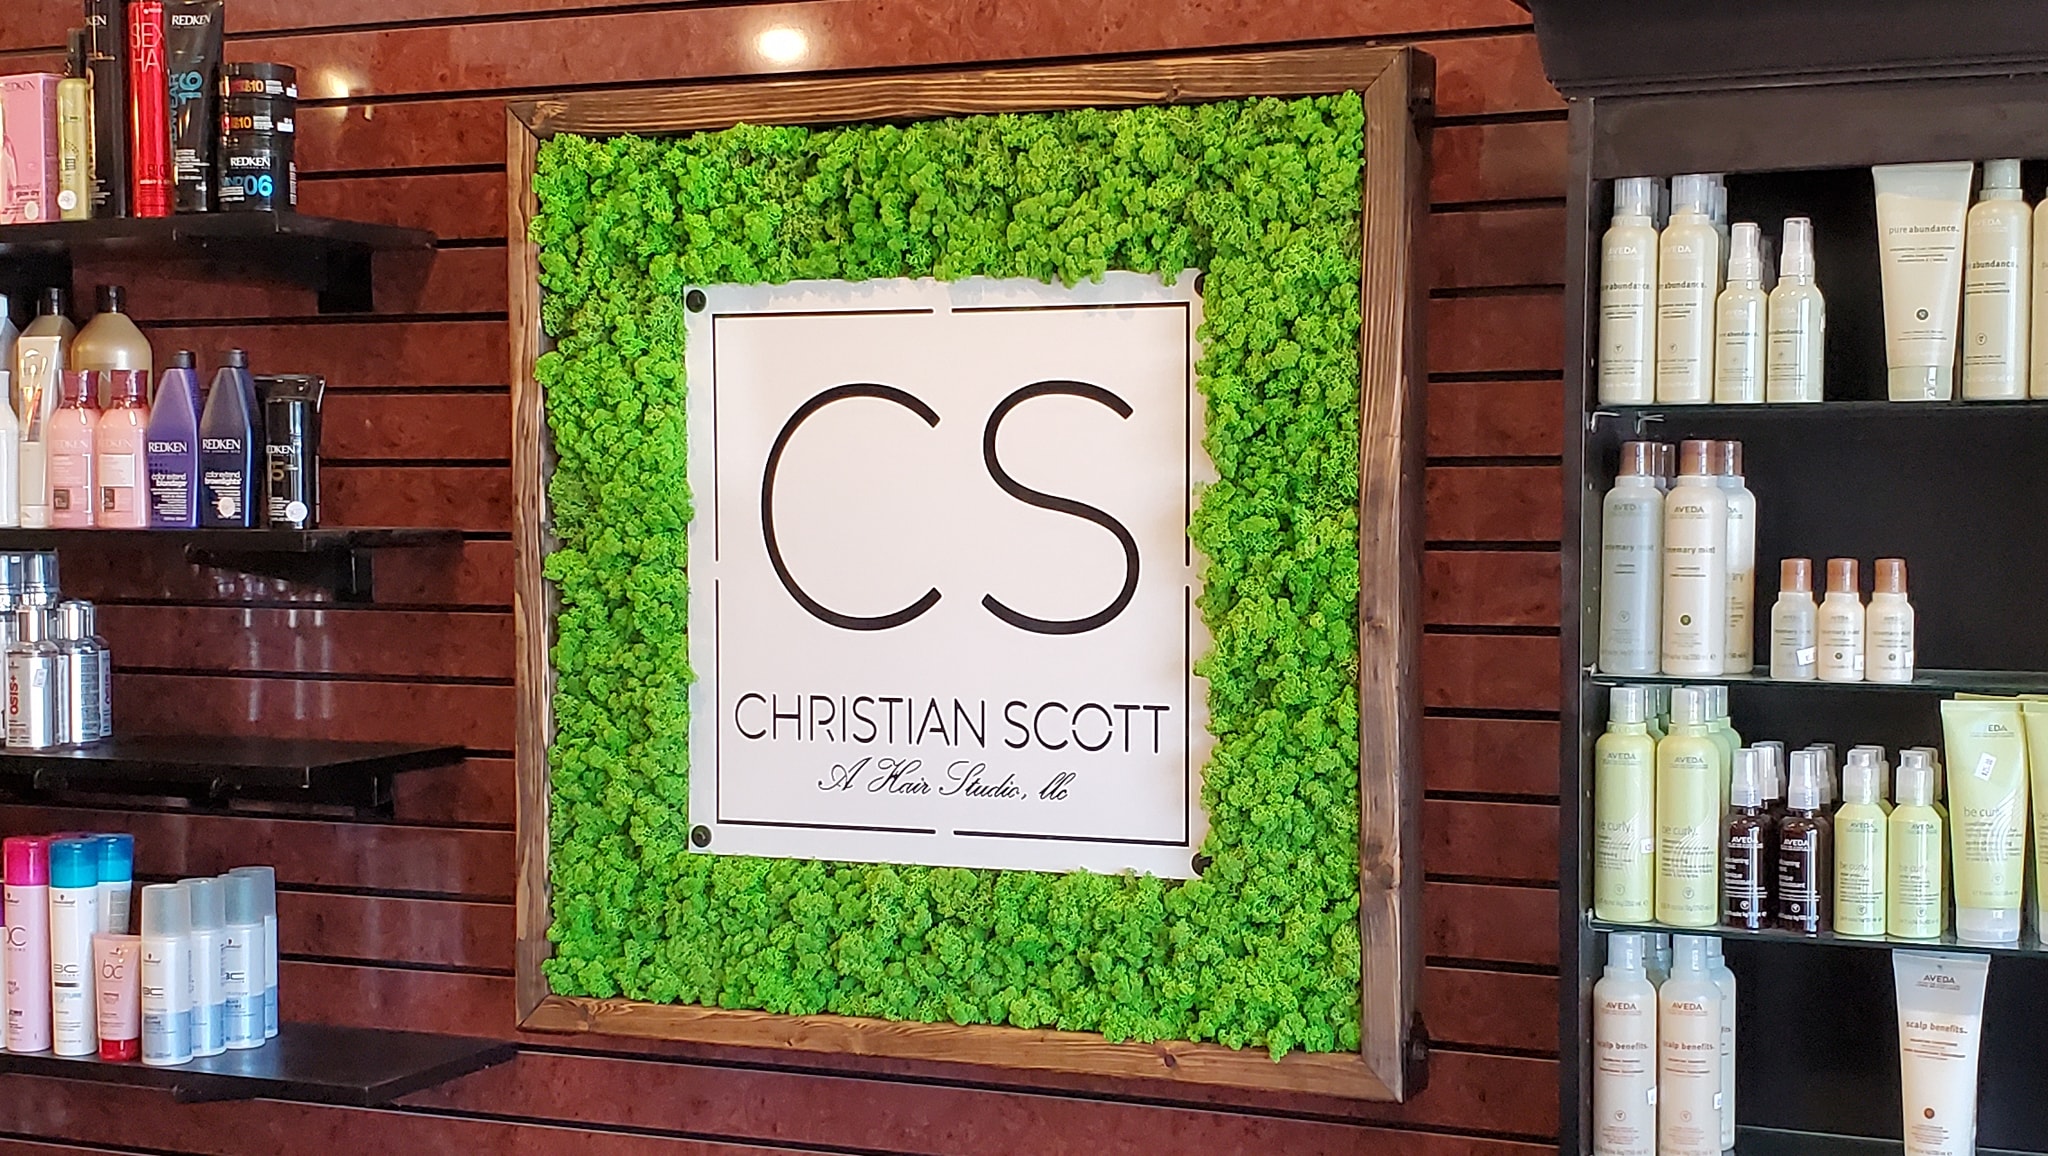 Christian Scott - A Hair Studio, LLC